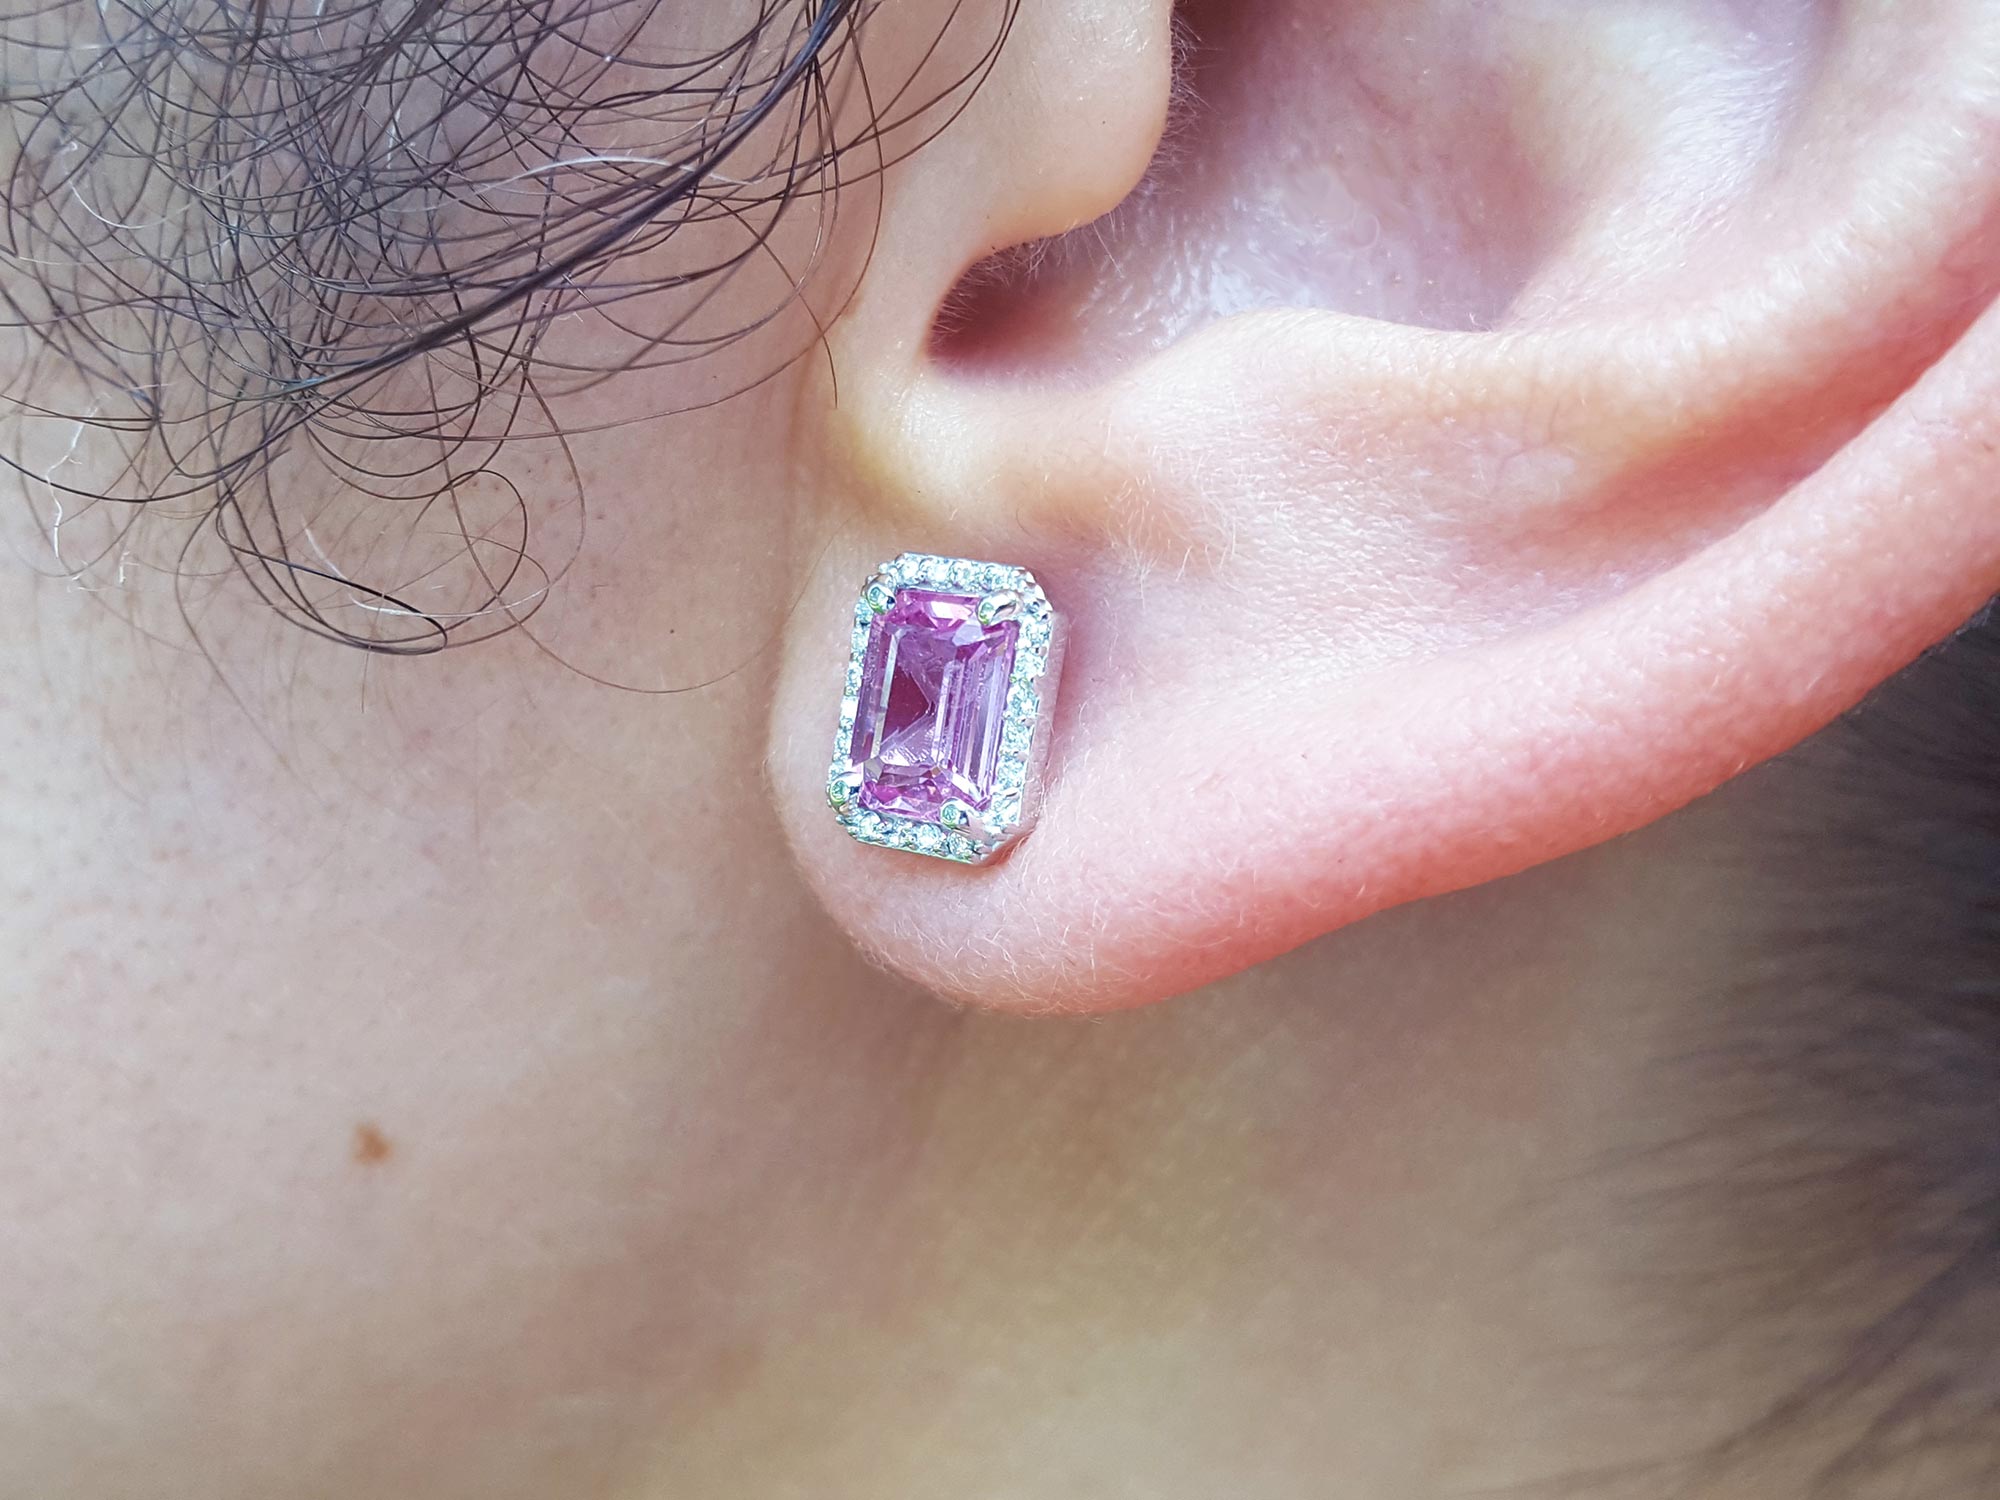 14k pink sapphire earrings white gold